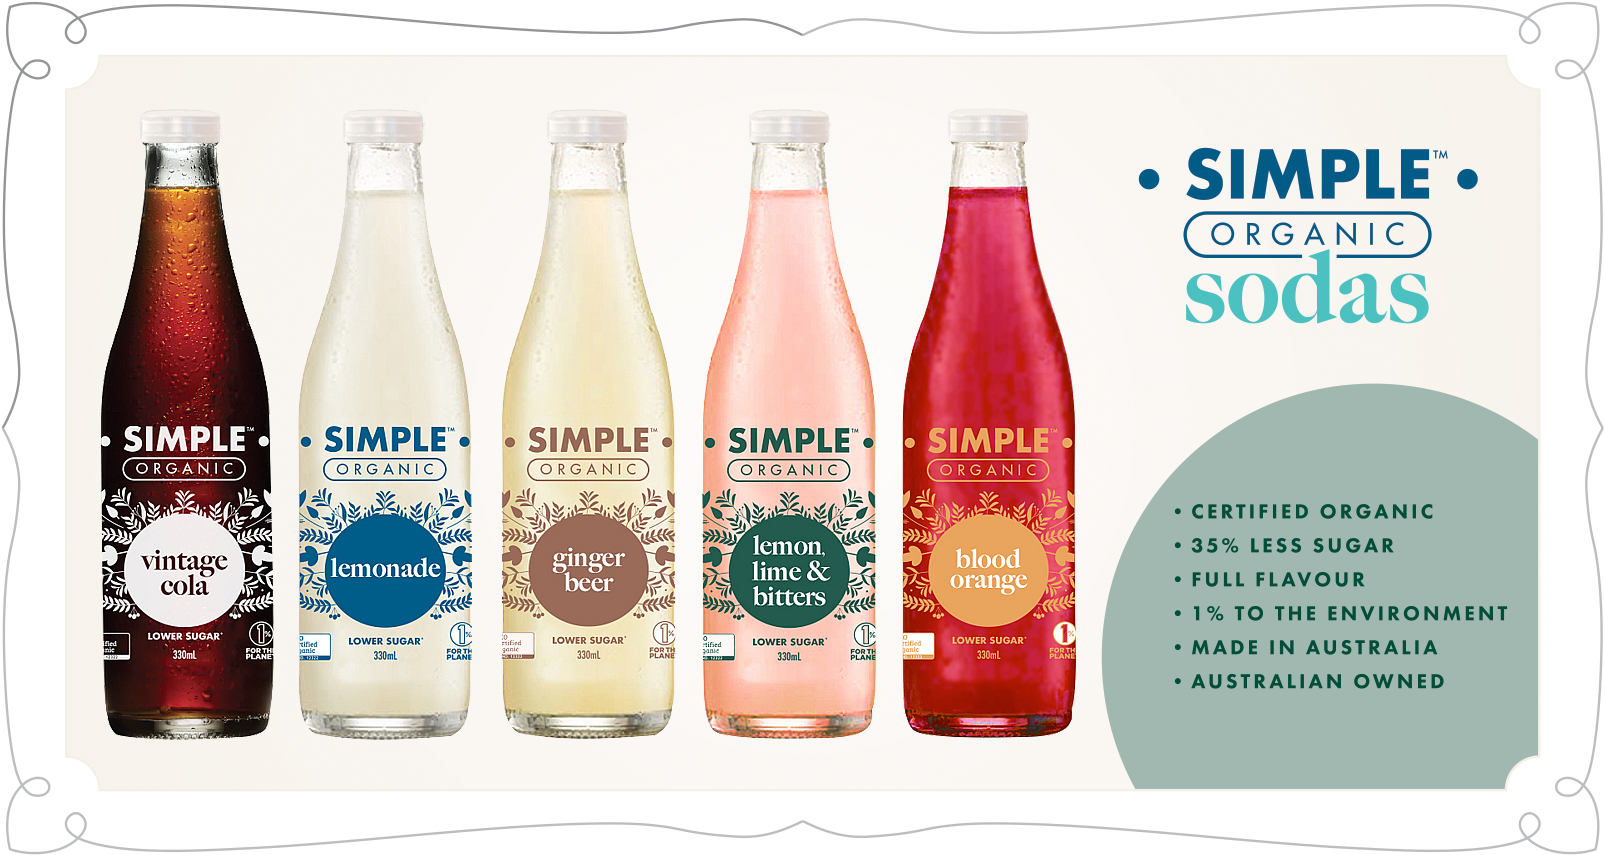 Simple Sodas range - organic soda made in Australia